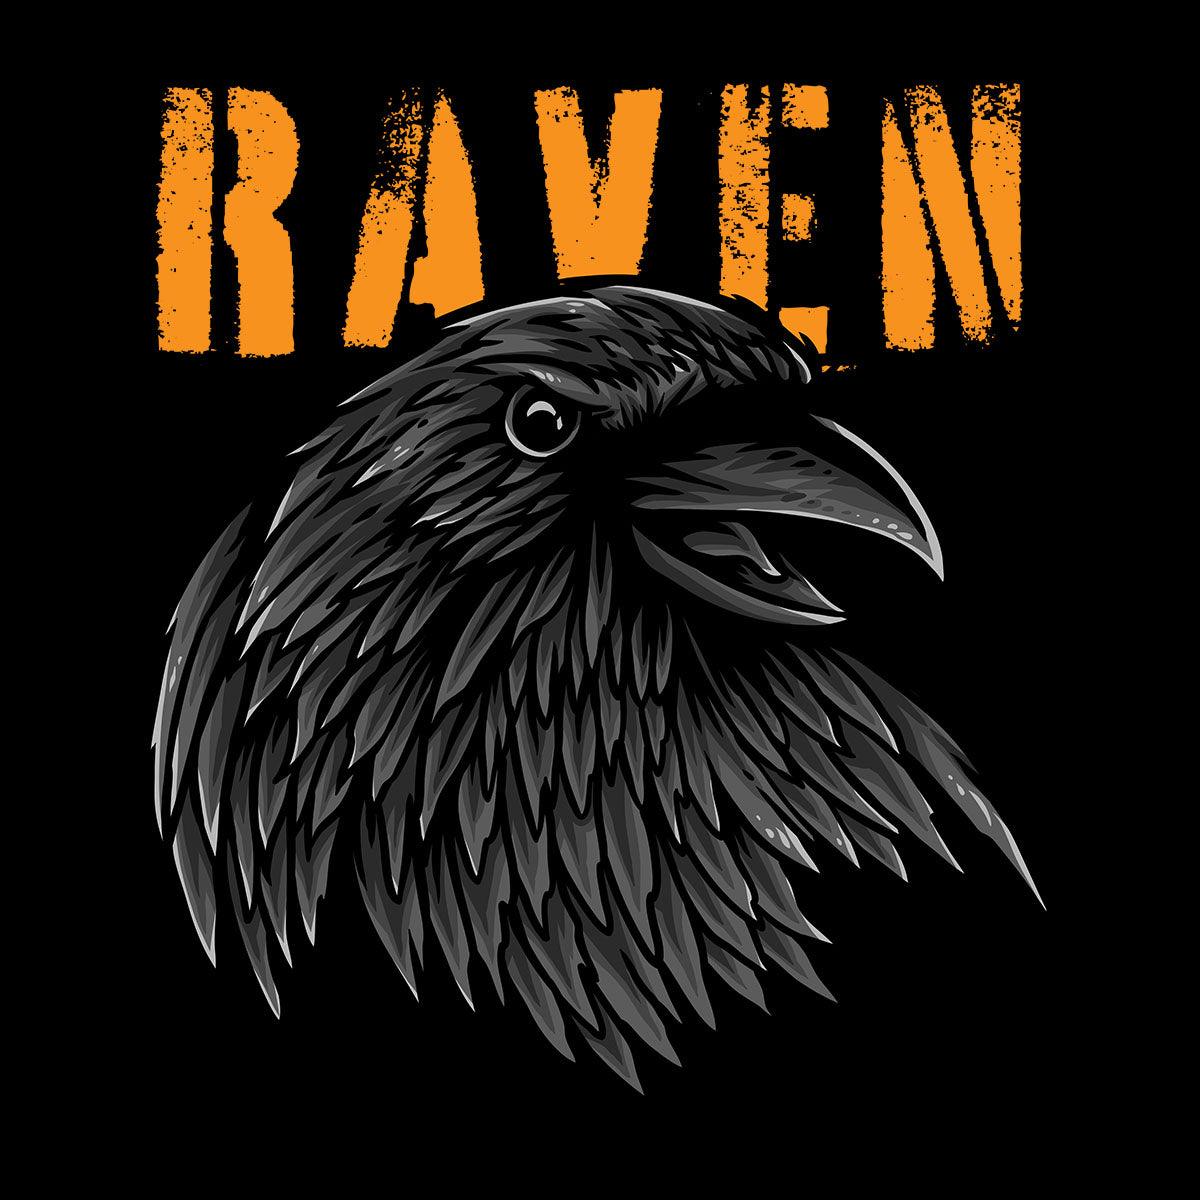 Black Raven Funny Bird Tee The World Needs More Bird Fun Unisex T-shirt - Kuzi Tees